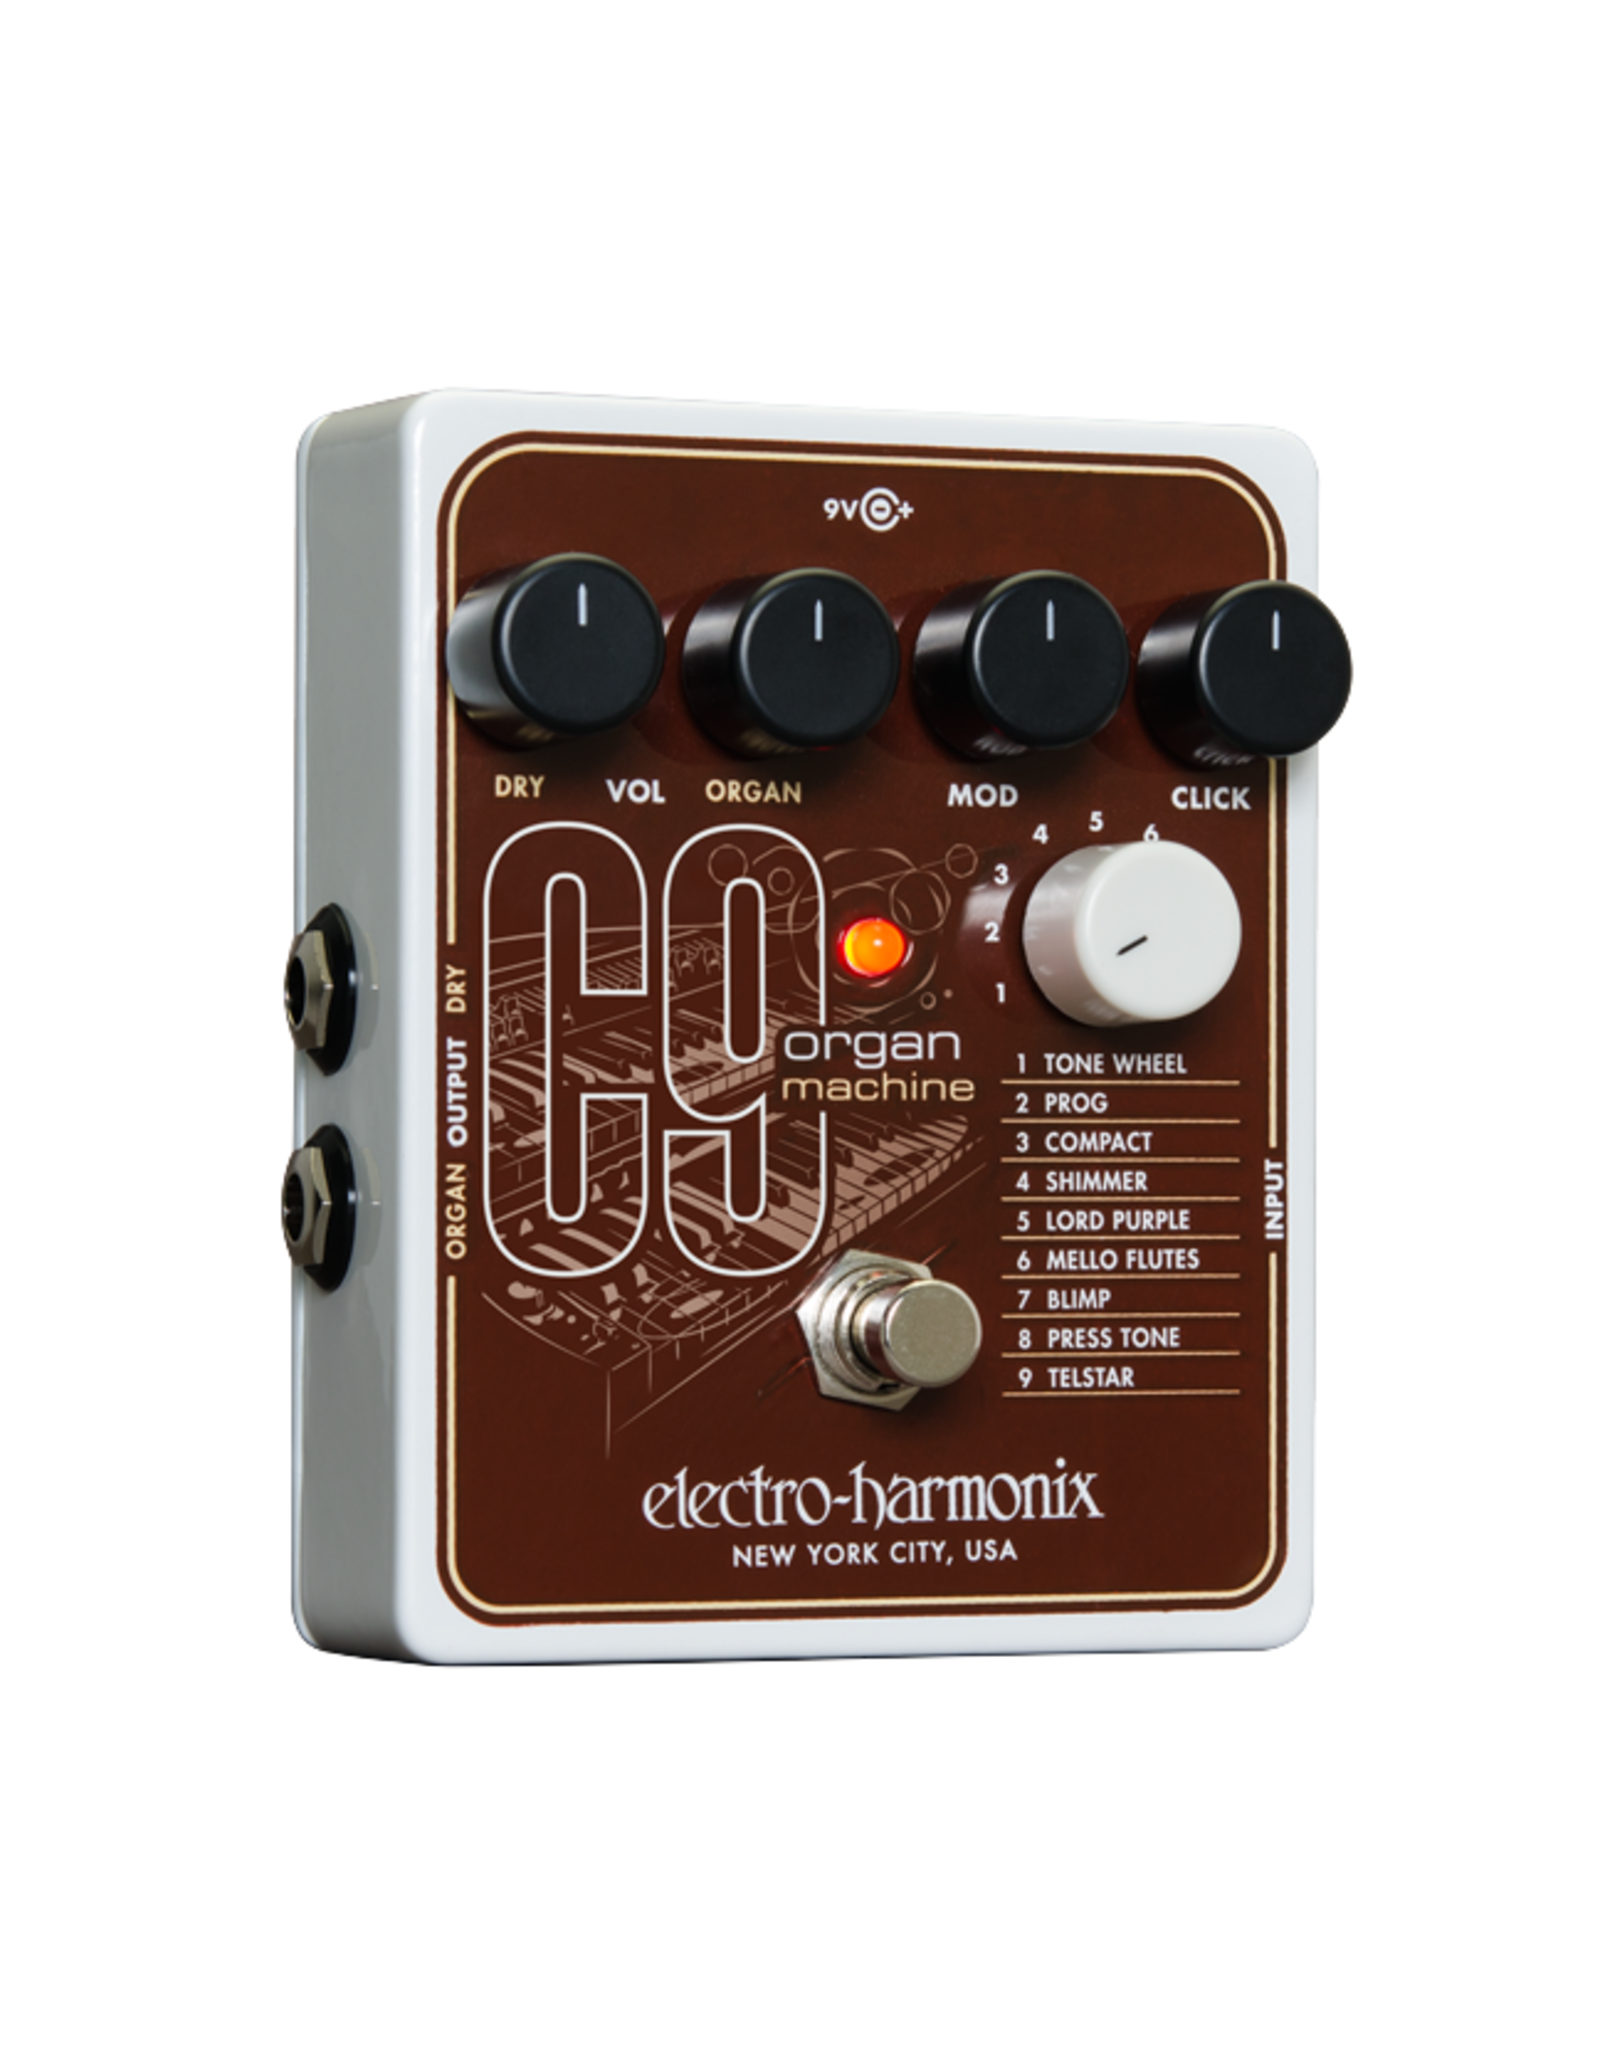 Electro-Harmonix EHX C9 Organ Machine, 9.6DC-200 PSU included